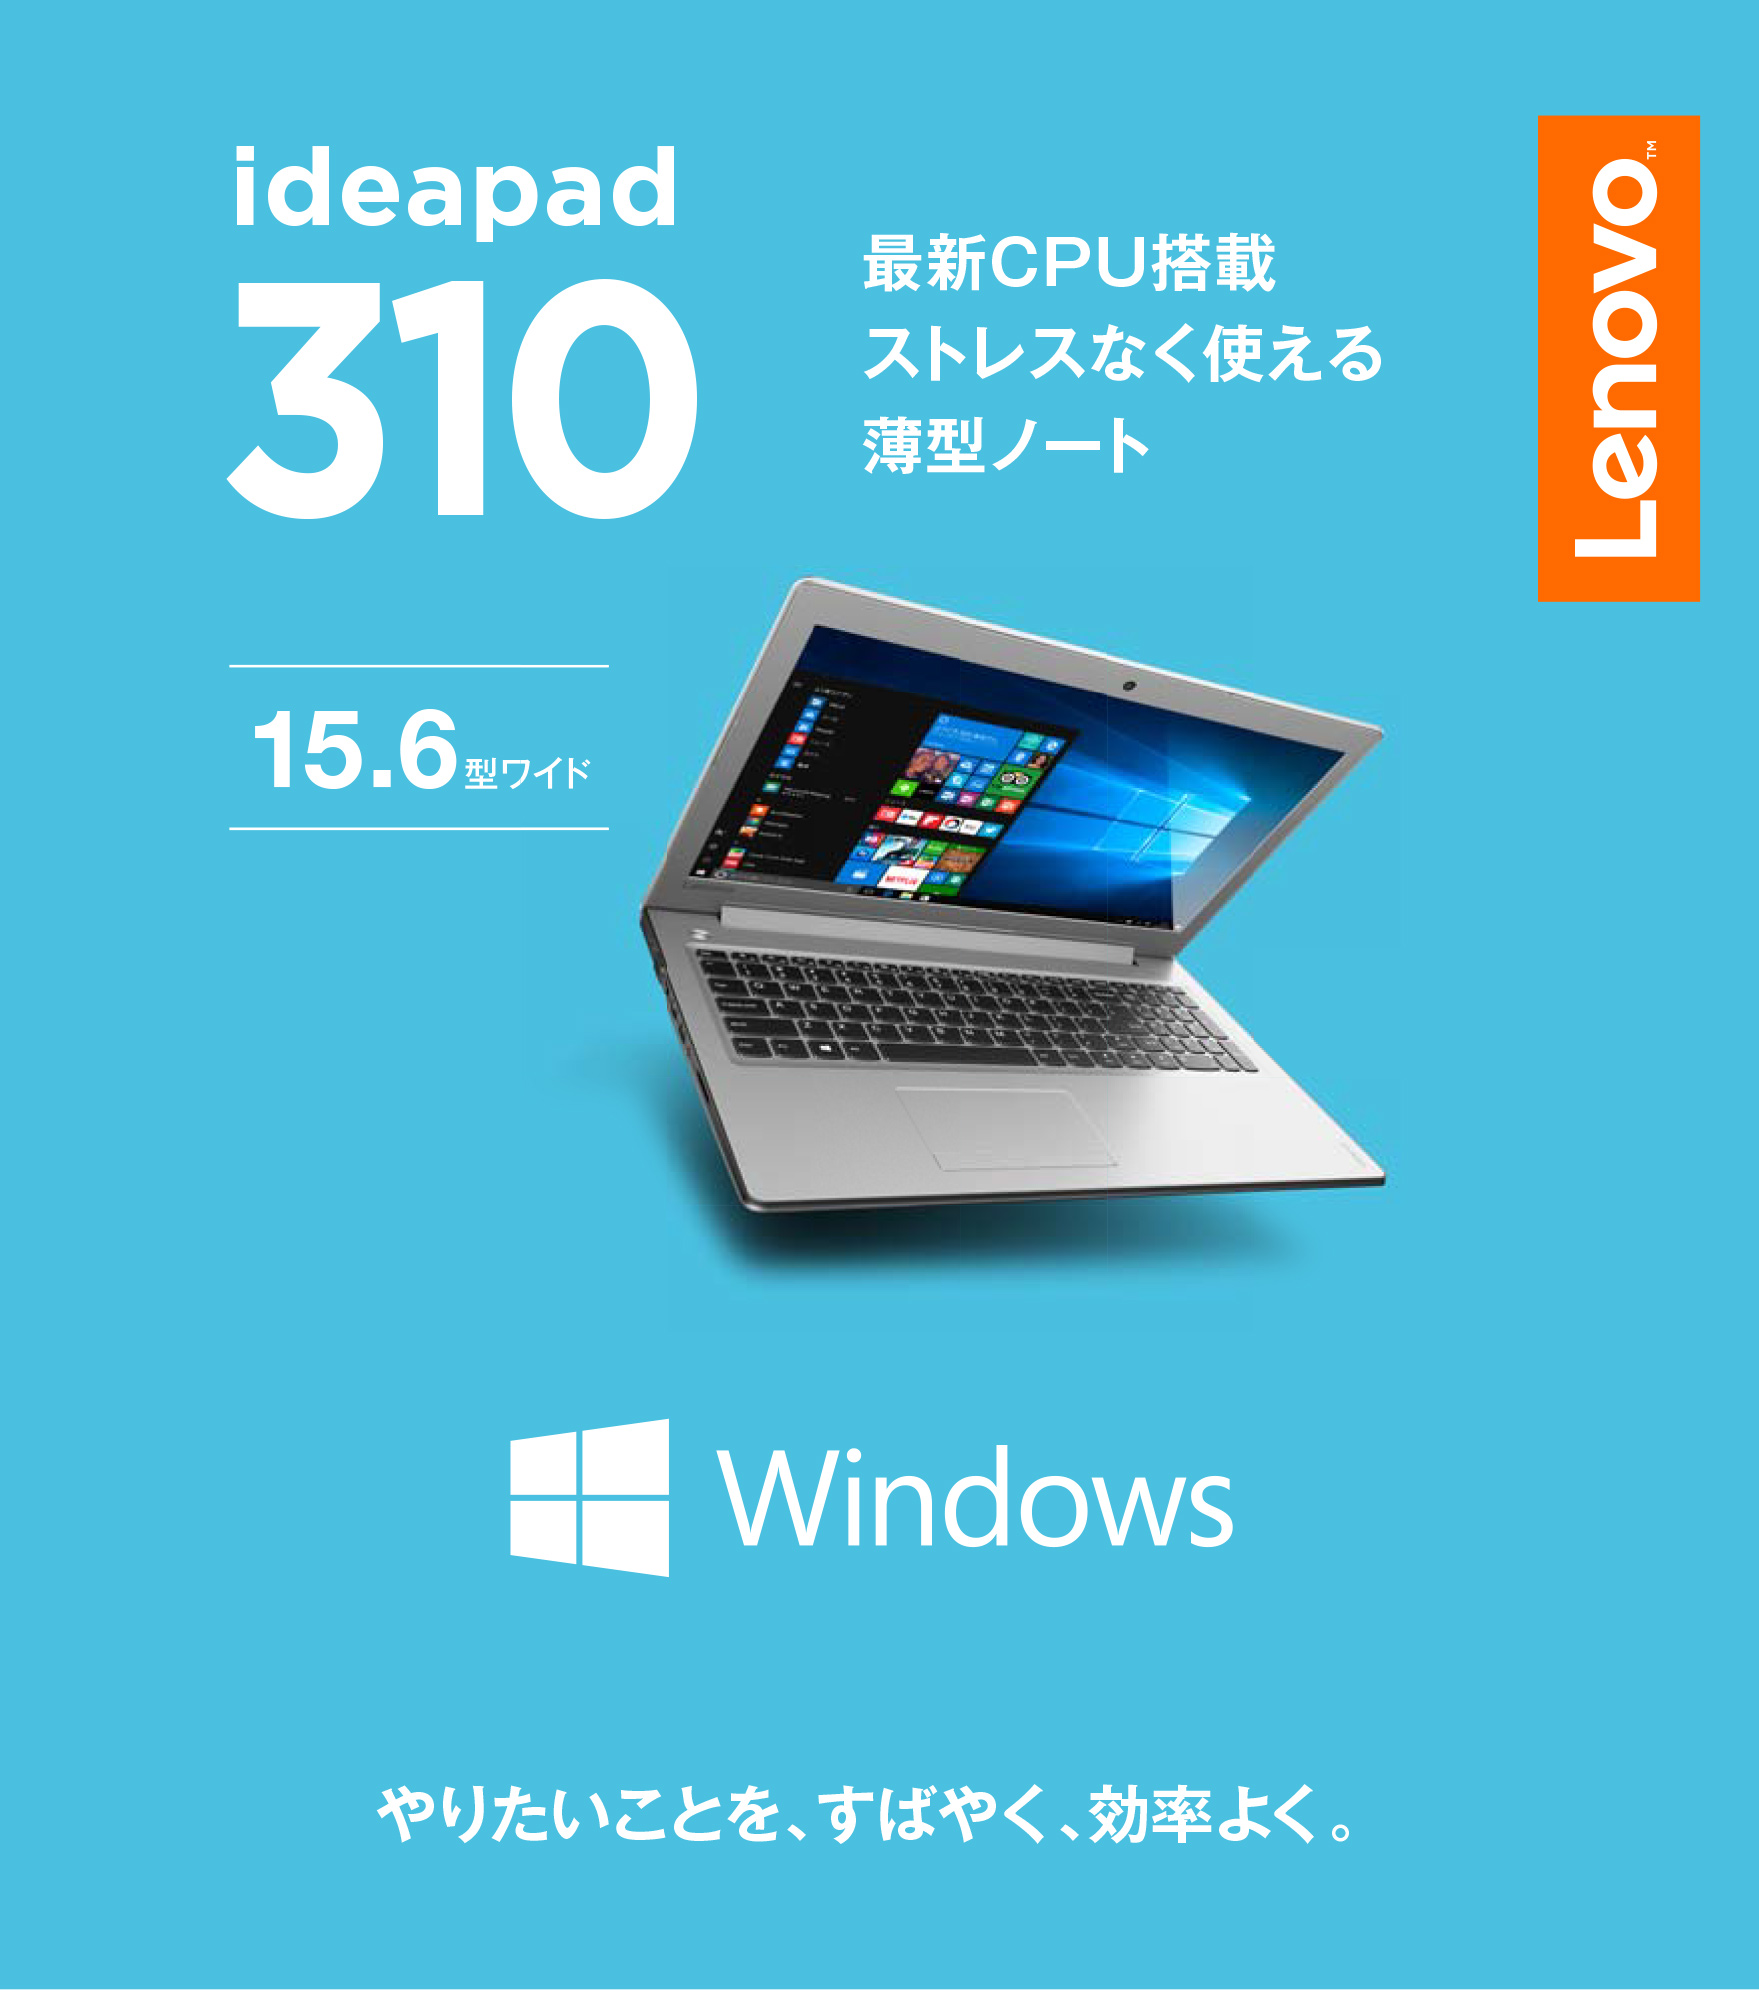 ŐVCPUڃXgXȂg锖^m[g Lenovo ideapad310